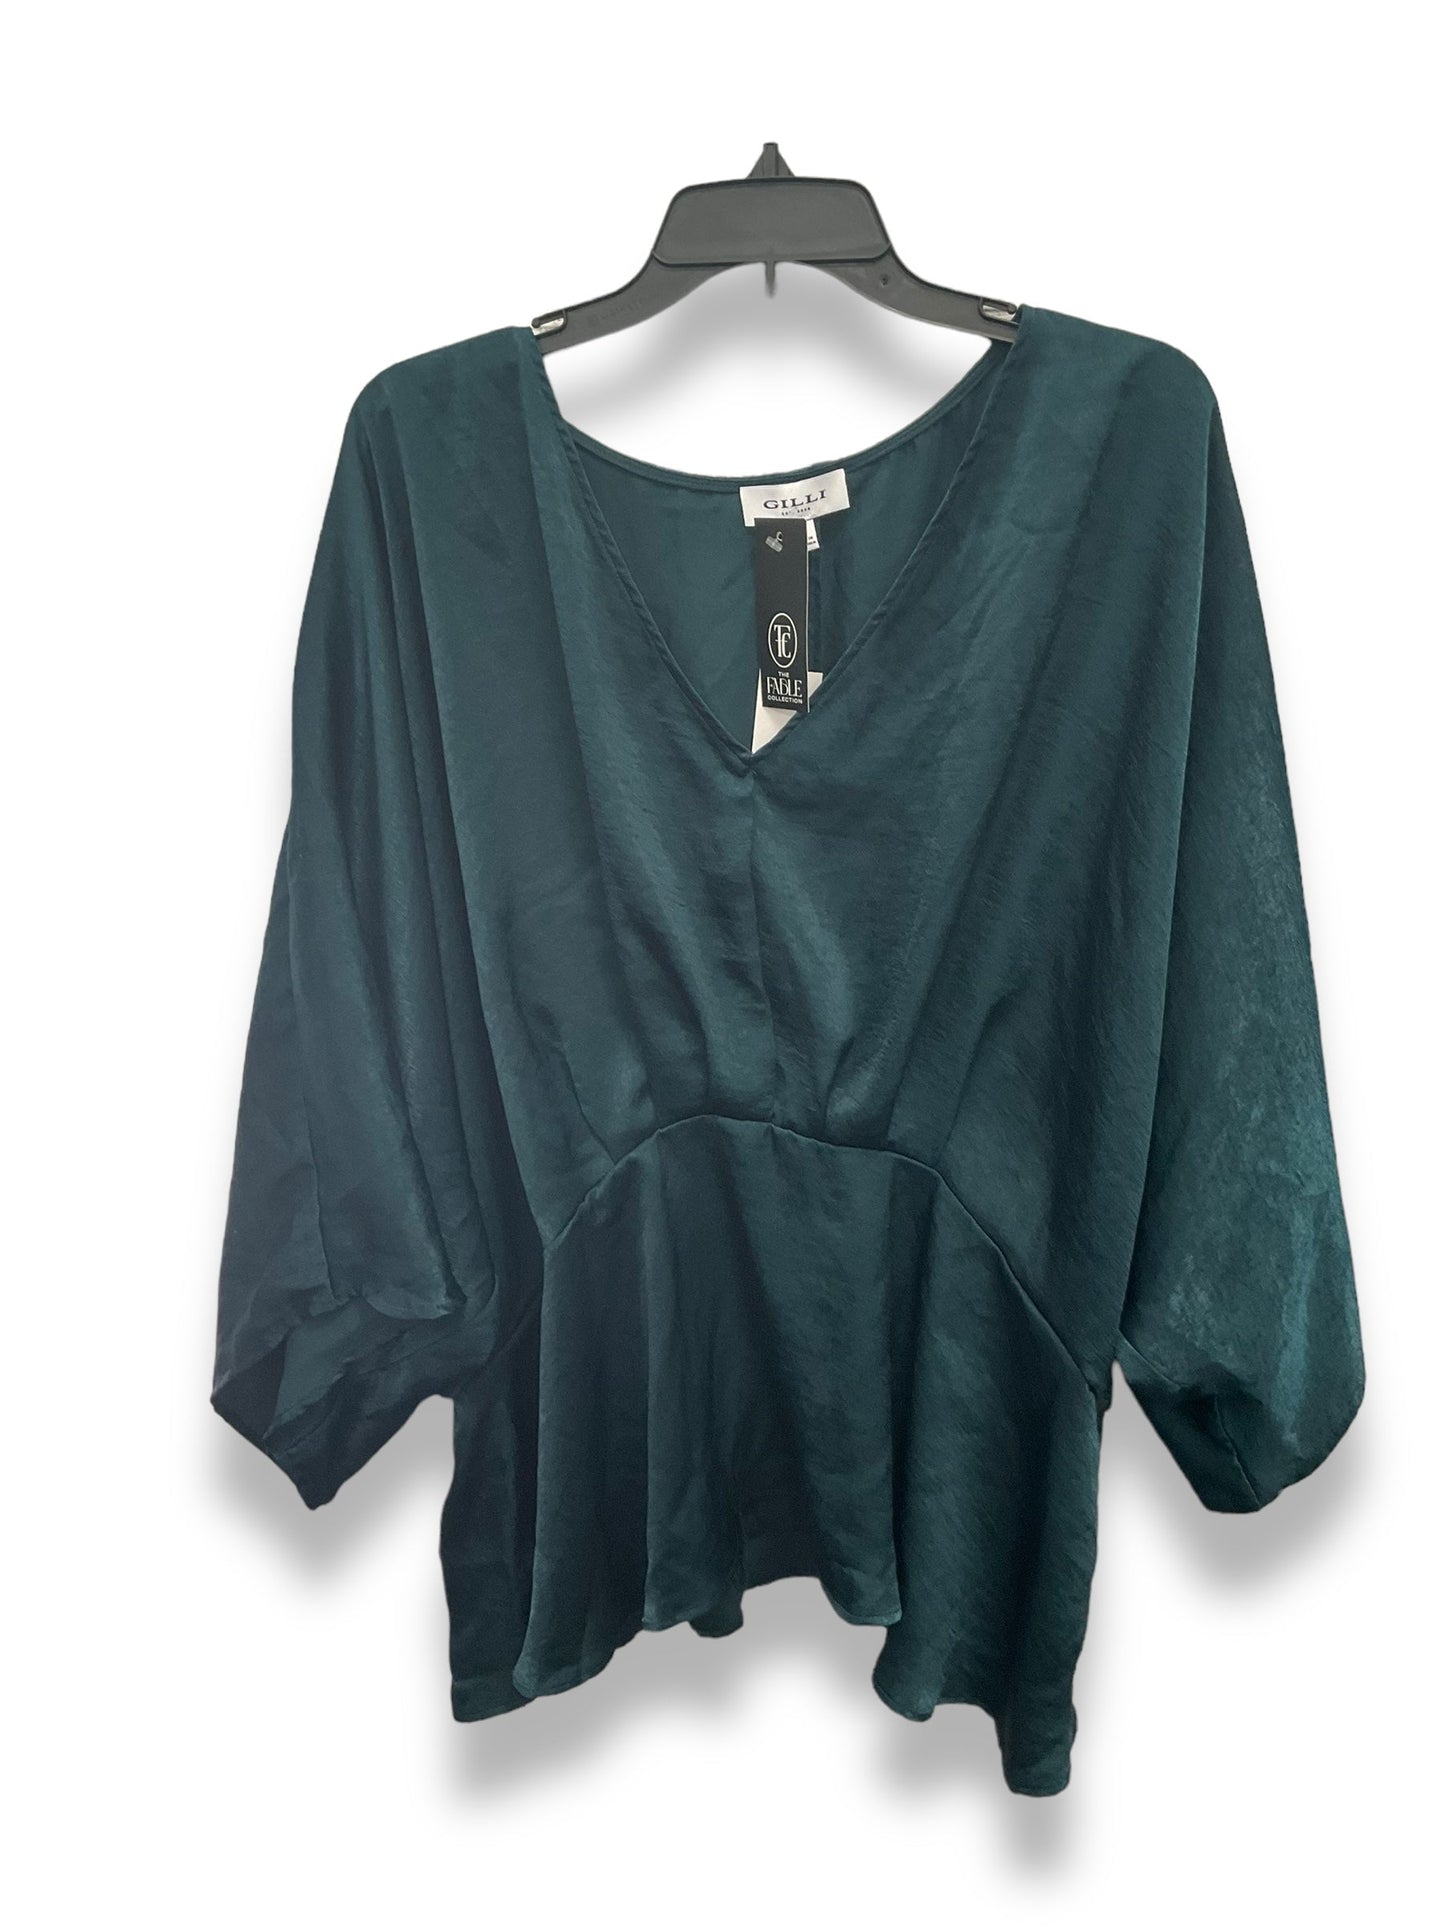 Green Blouse Short Sleeve Gilli, Size 3x